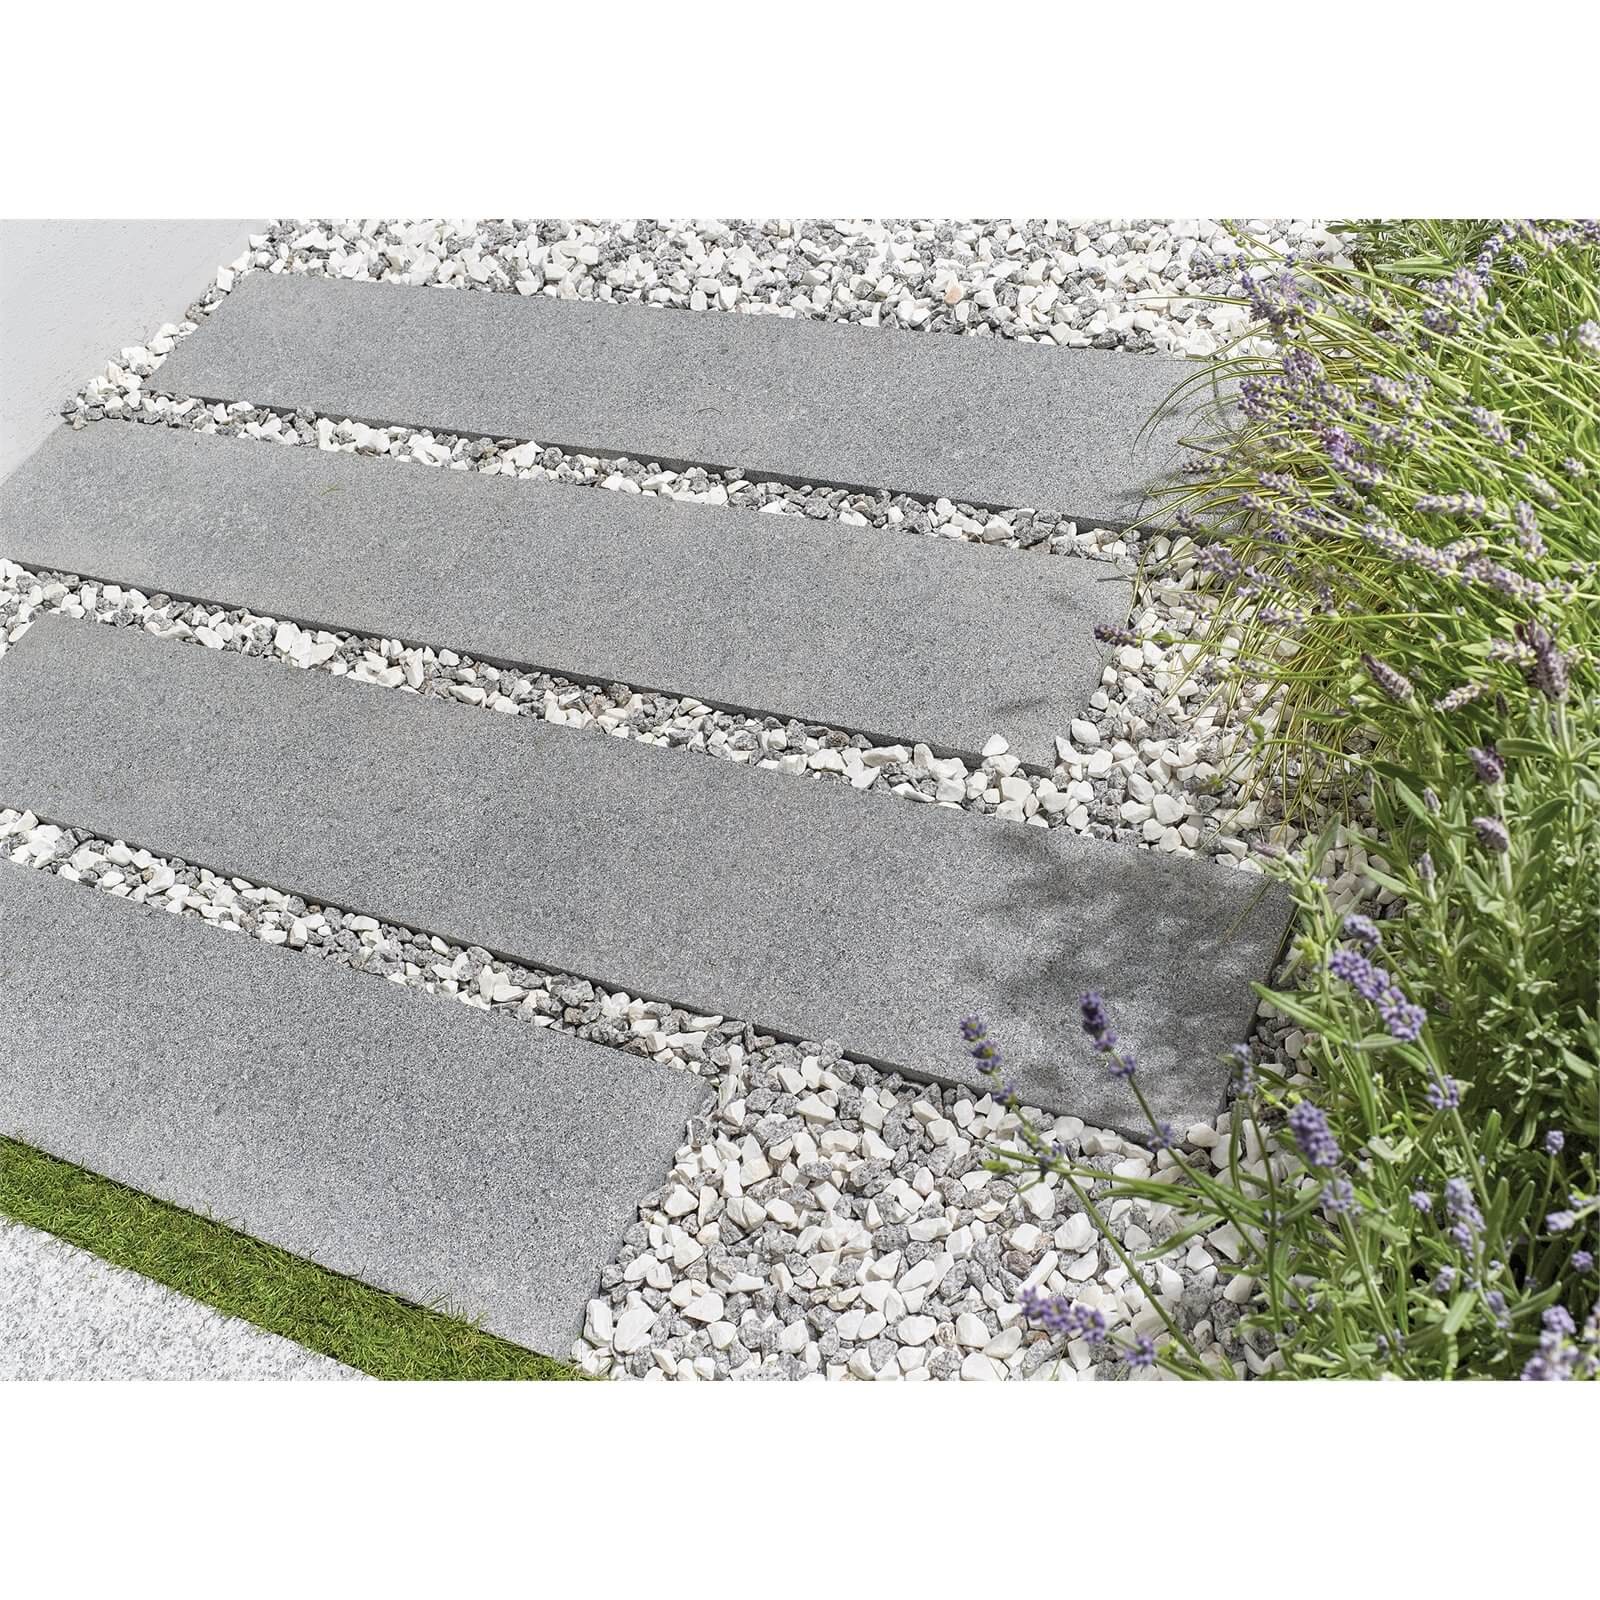 Granite Paving 600 x 200mm Dark Grey - Full Pack of 92 Slabs